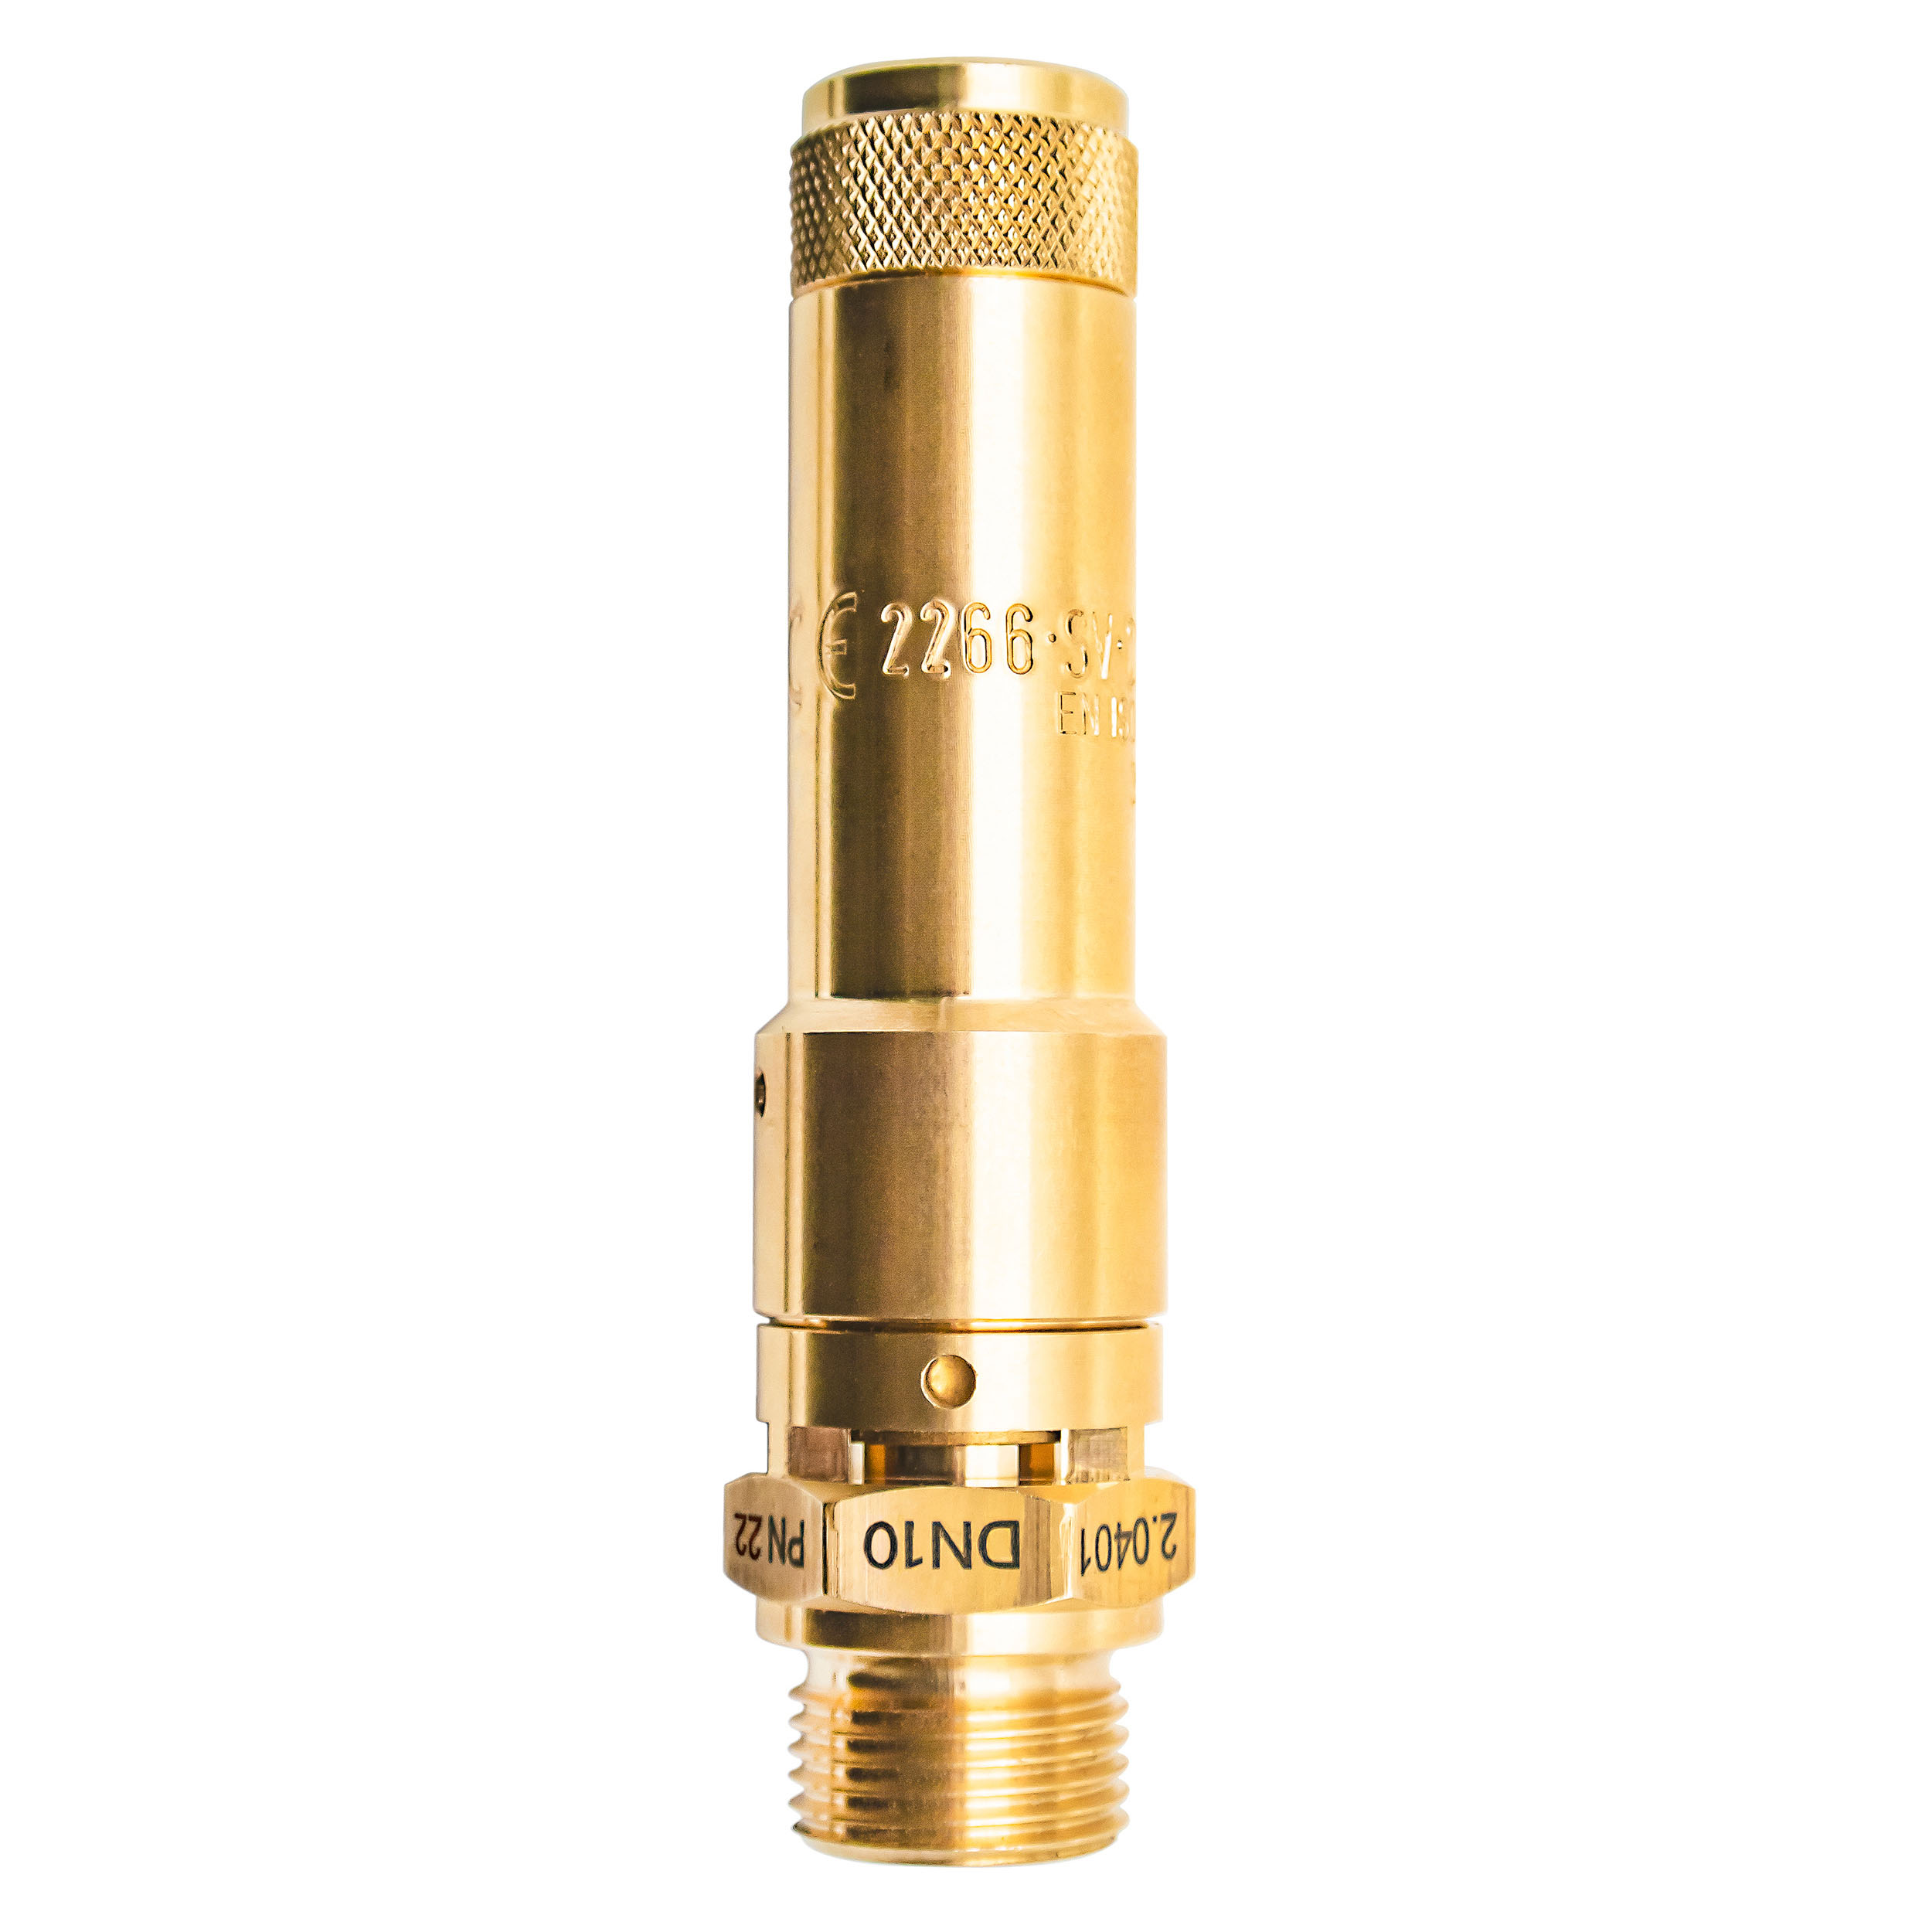 Component-tested safety valve DN 10, G¾, pressure: 2-3.6 bar